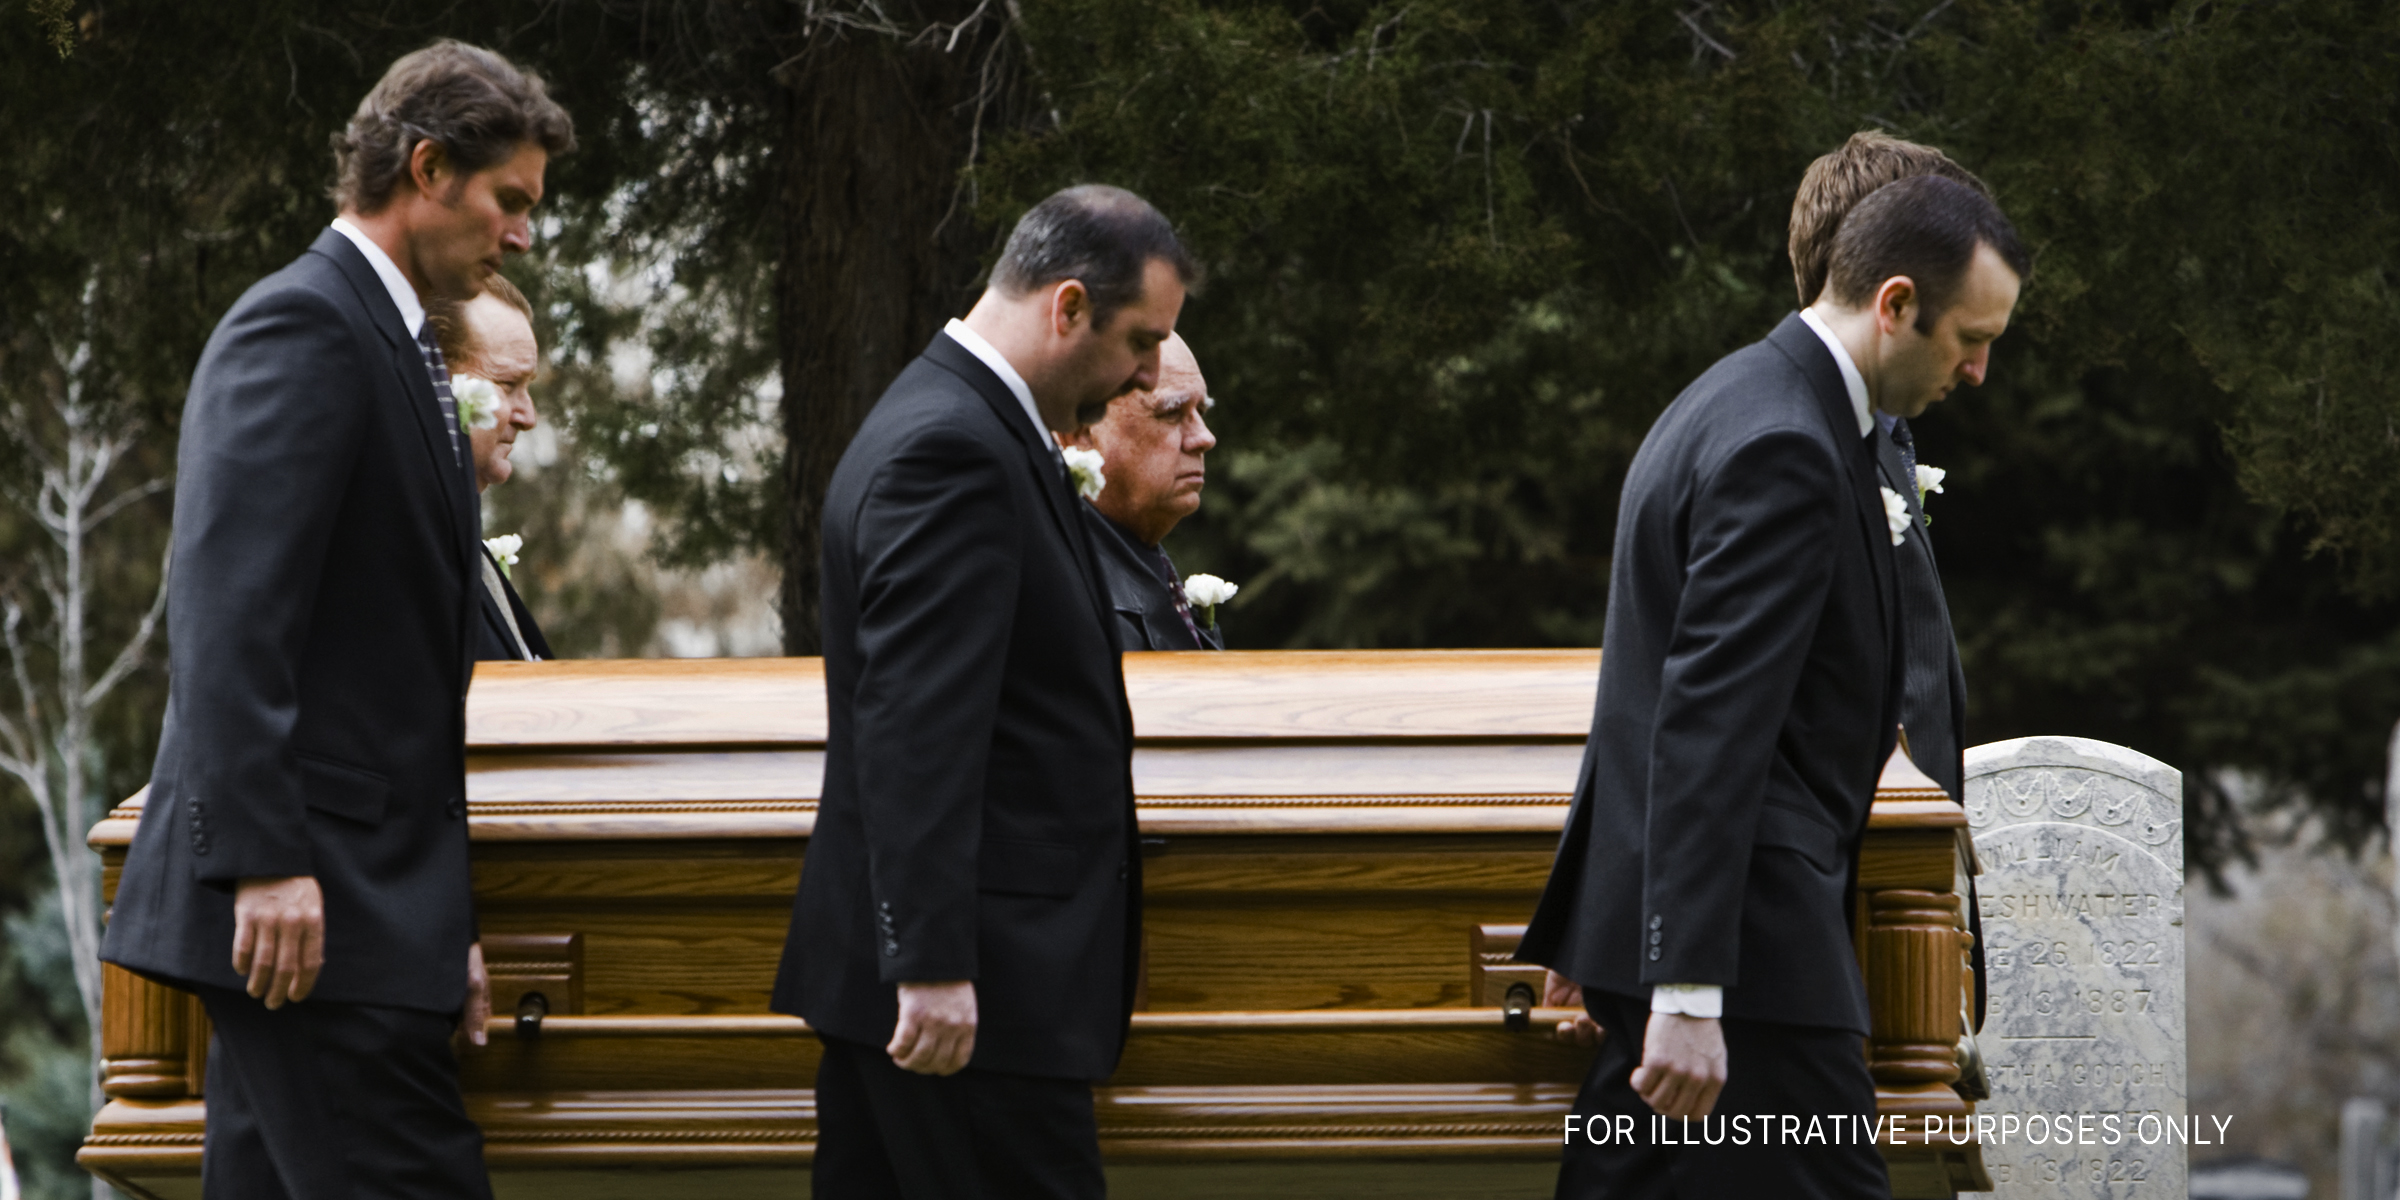 Men holding a casket. | Source: Getty Images